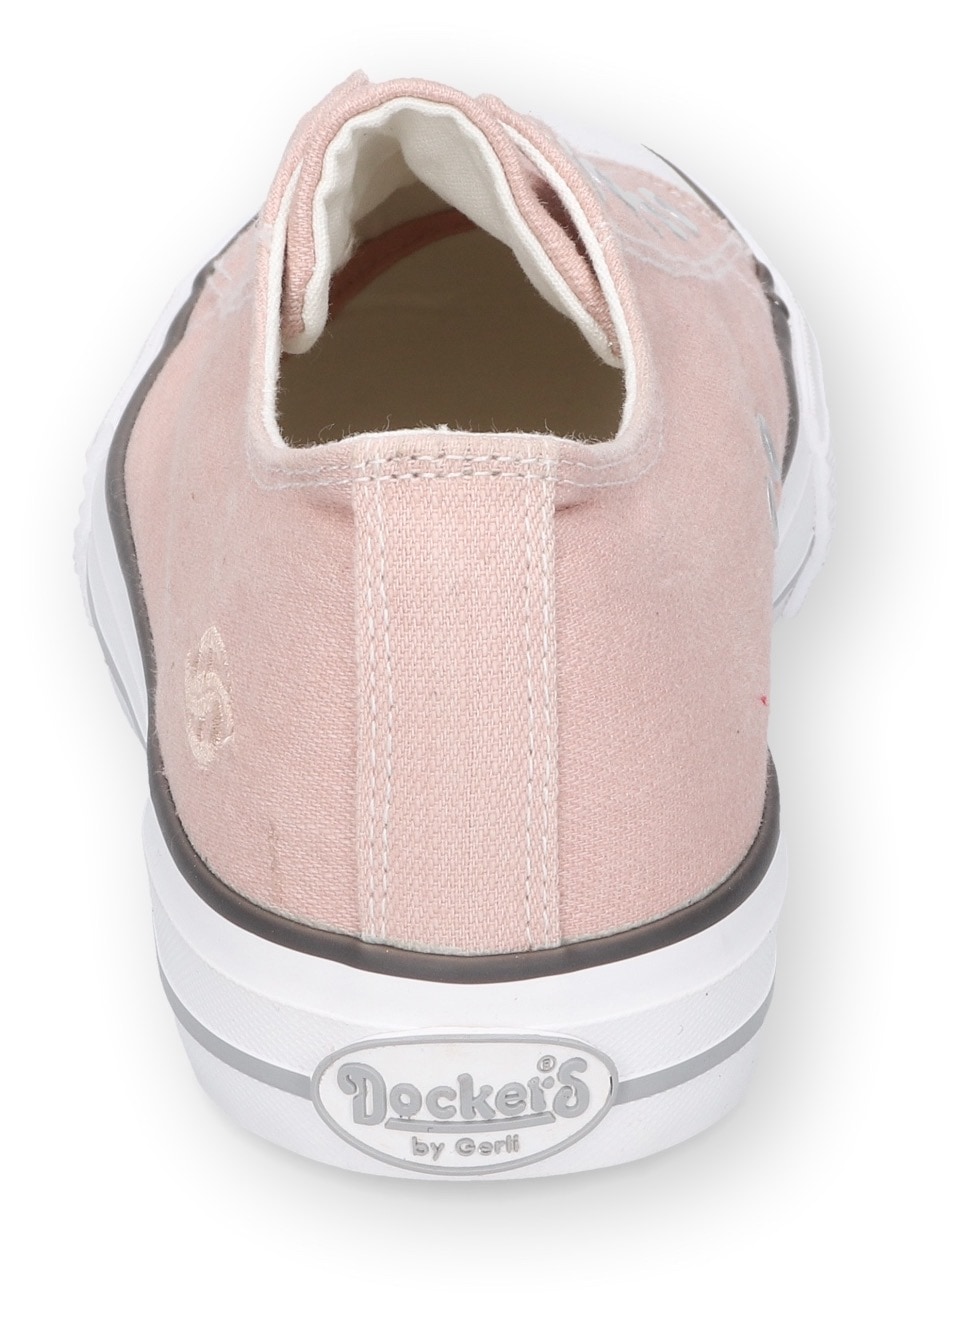 Dockers by Sneaker, Imwalking Gerli Damen für mit bei Zierösen Slip-On